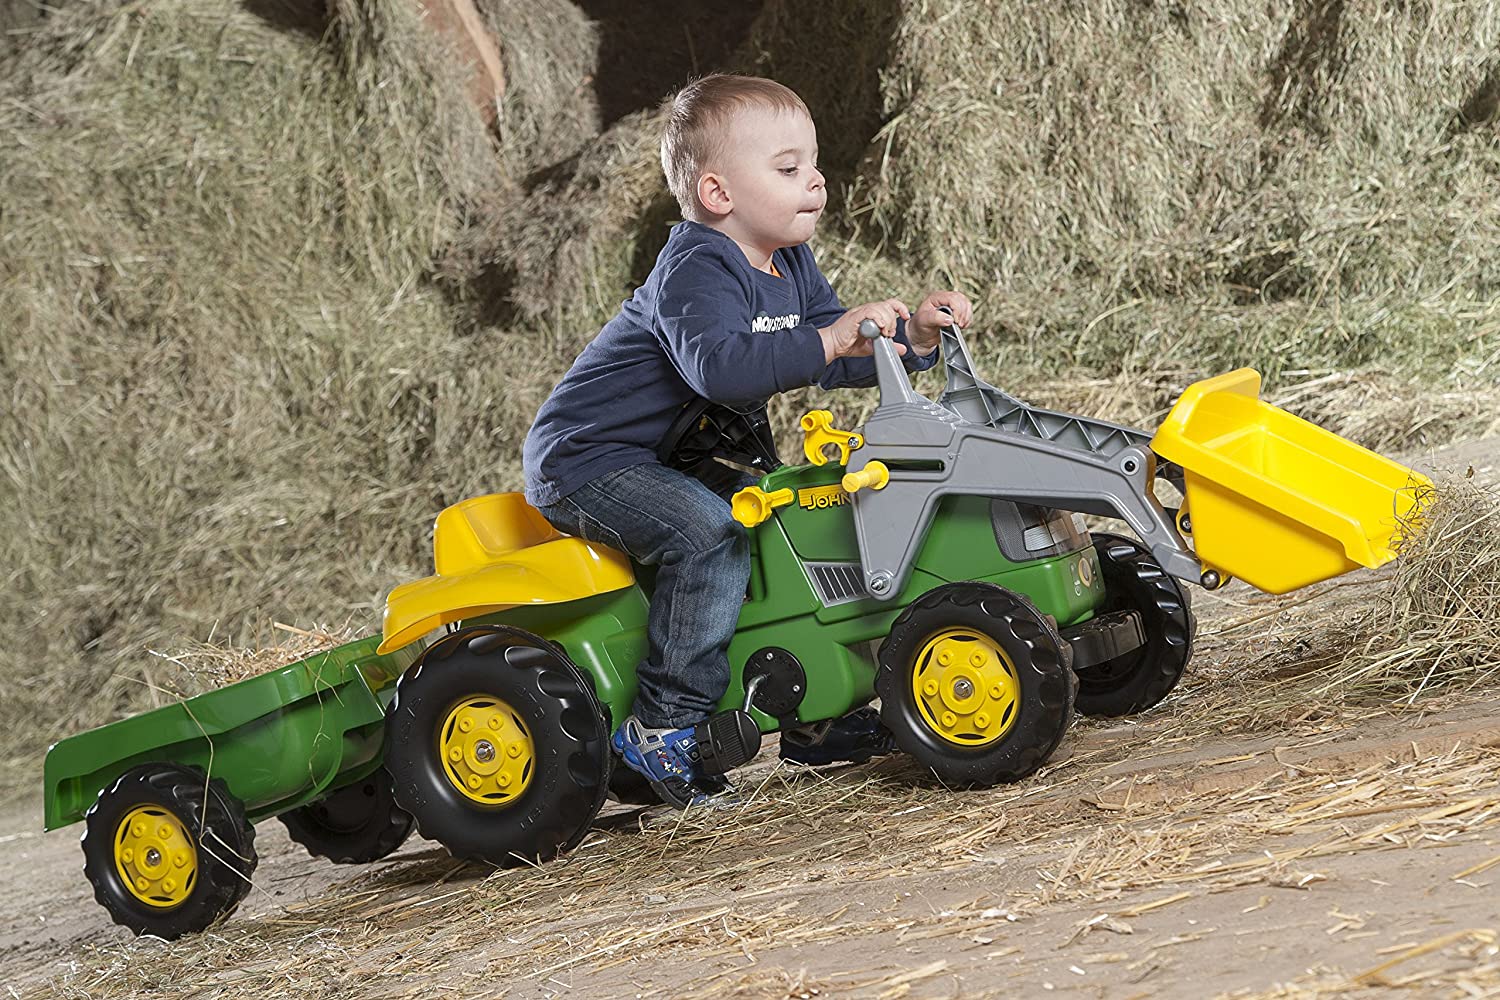 Rolly Kid John Deere Tractor Loader & Trailer